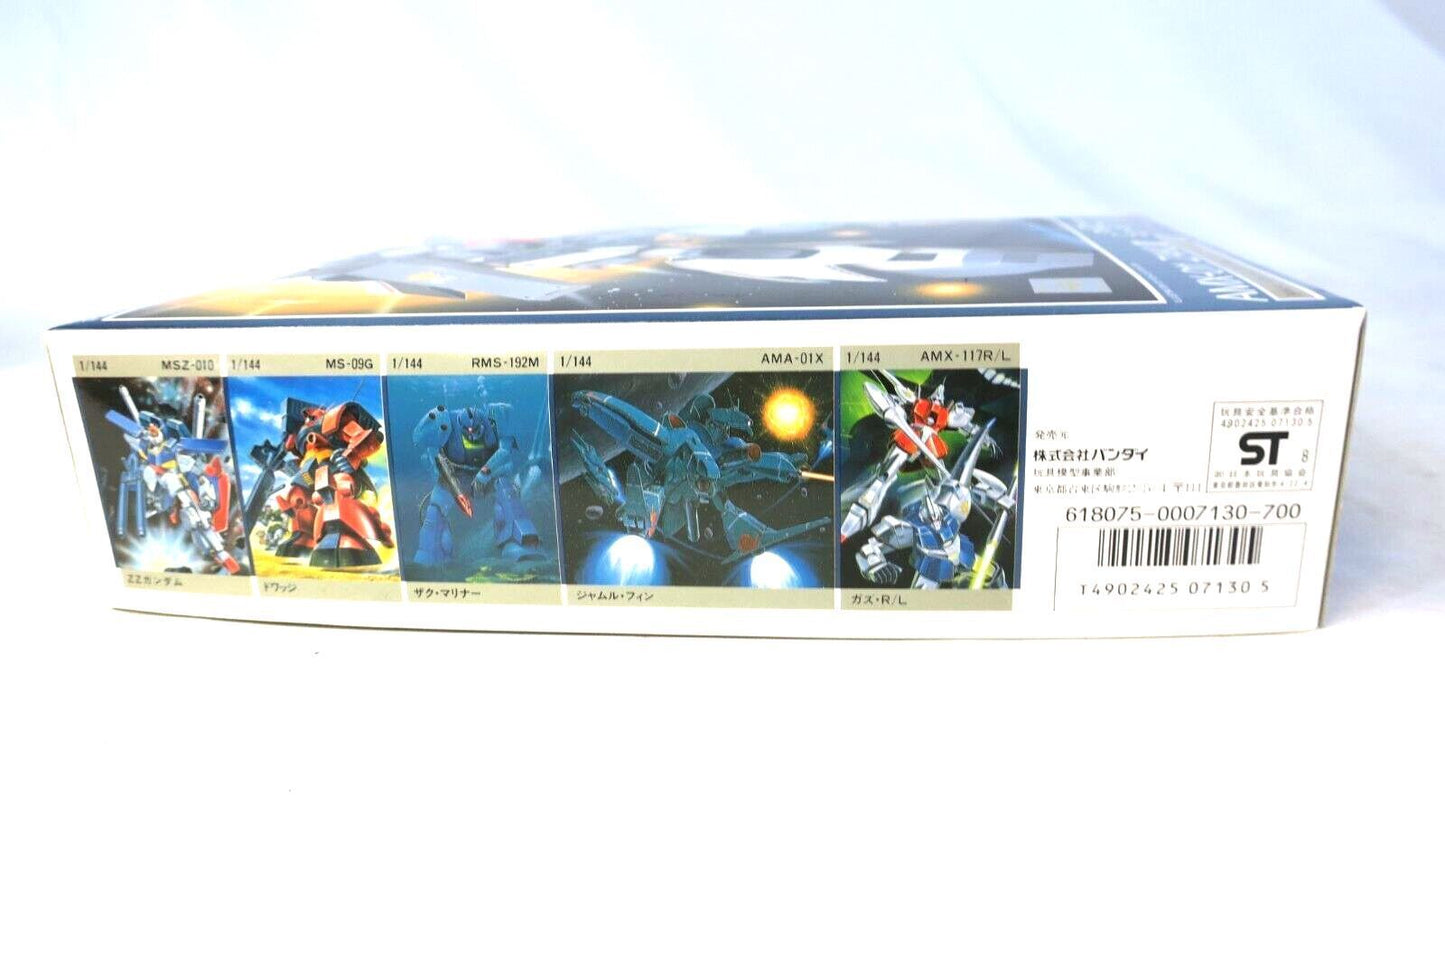 Bandai Gundam ZZ Zaku III AMX-011 1/144 anime mech Model Kit  0007130 (C13)